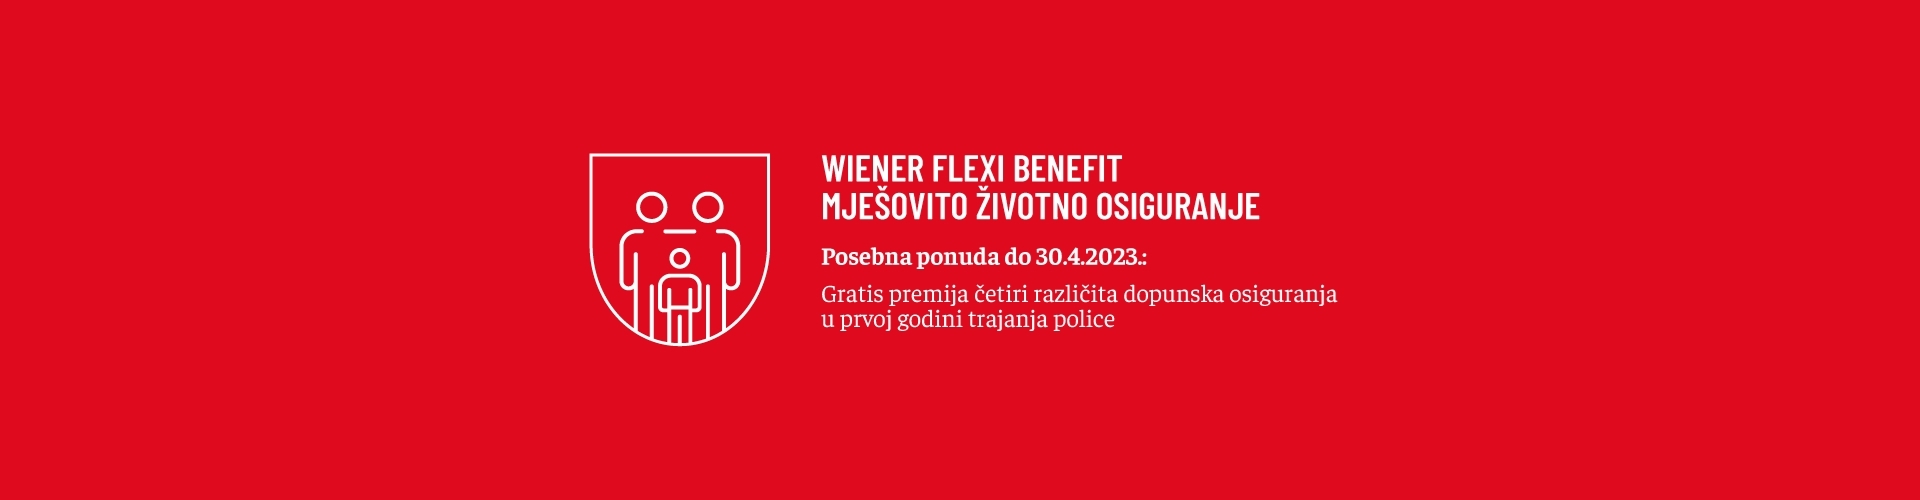 ‎Flexi benefit